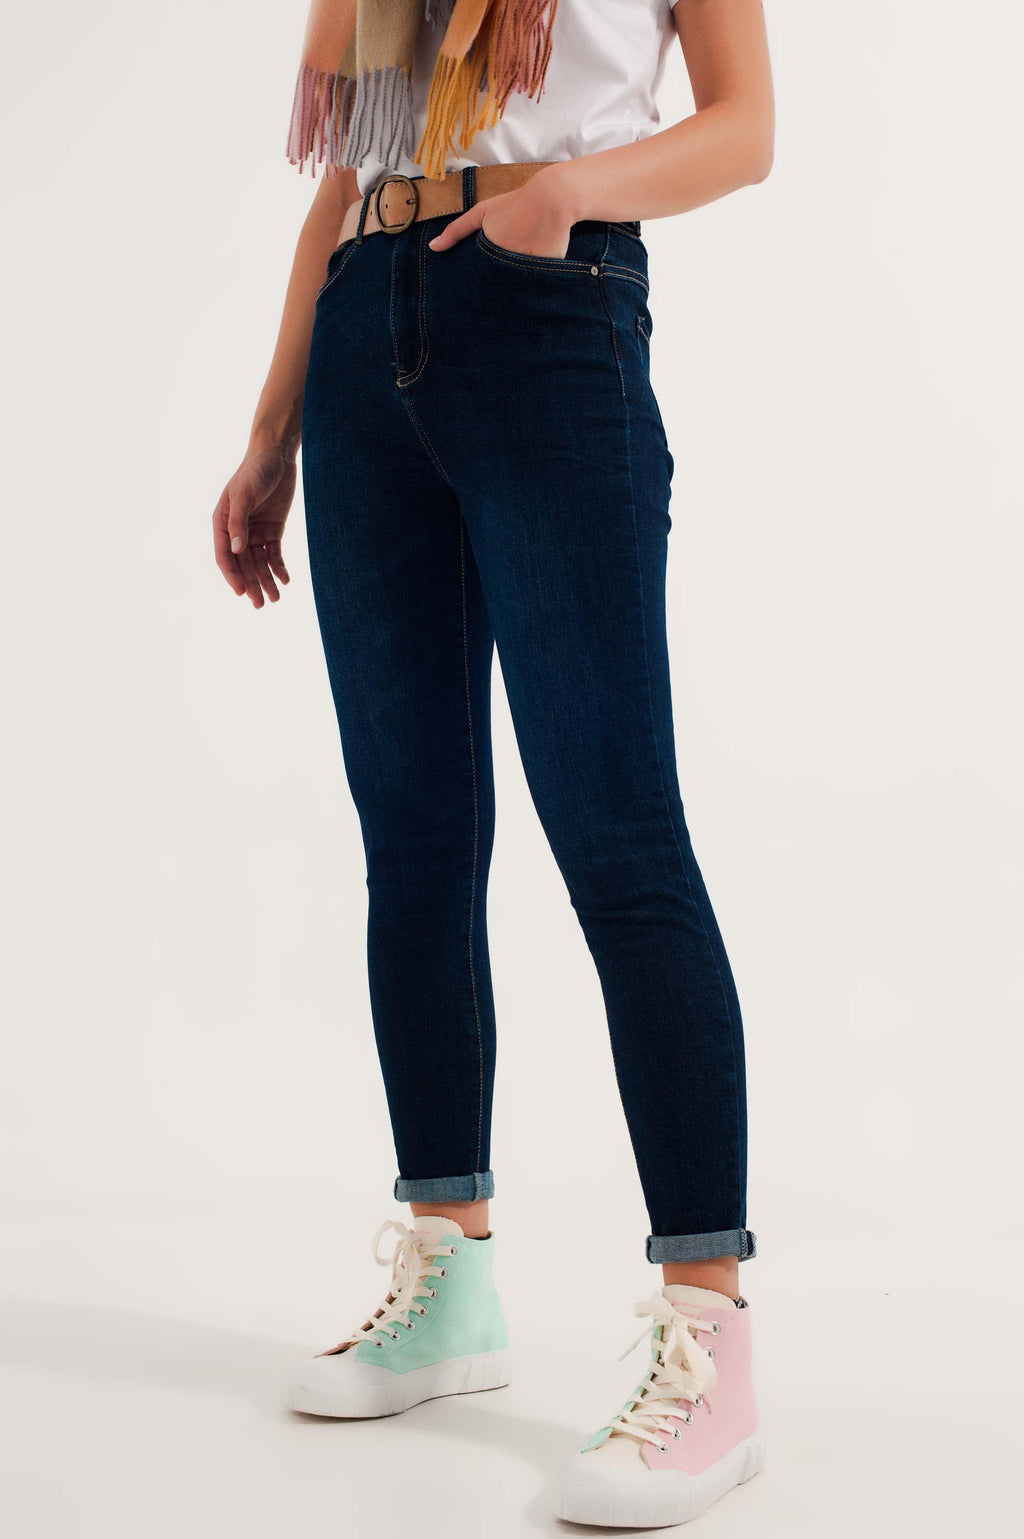 Q2 Women's Jean Skinny Stretch Jeans in Mid Wash Blue